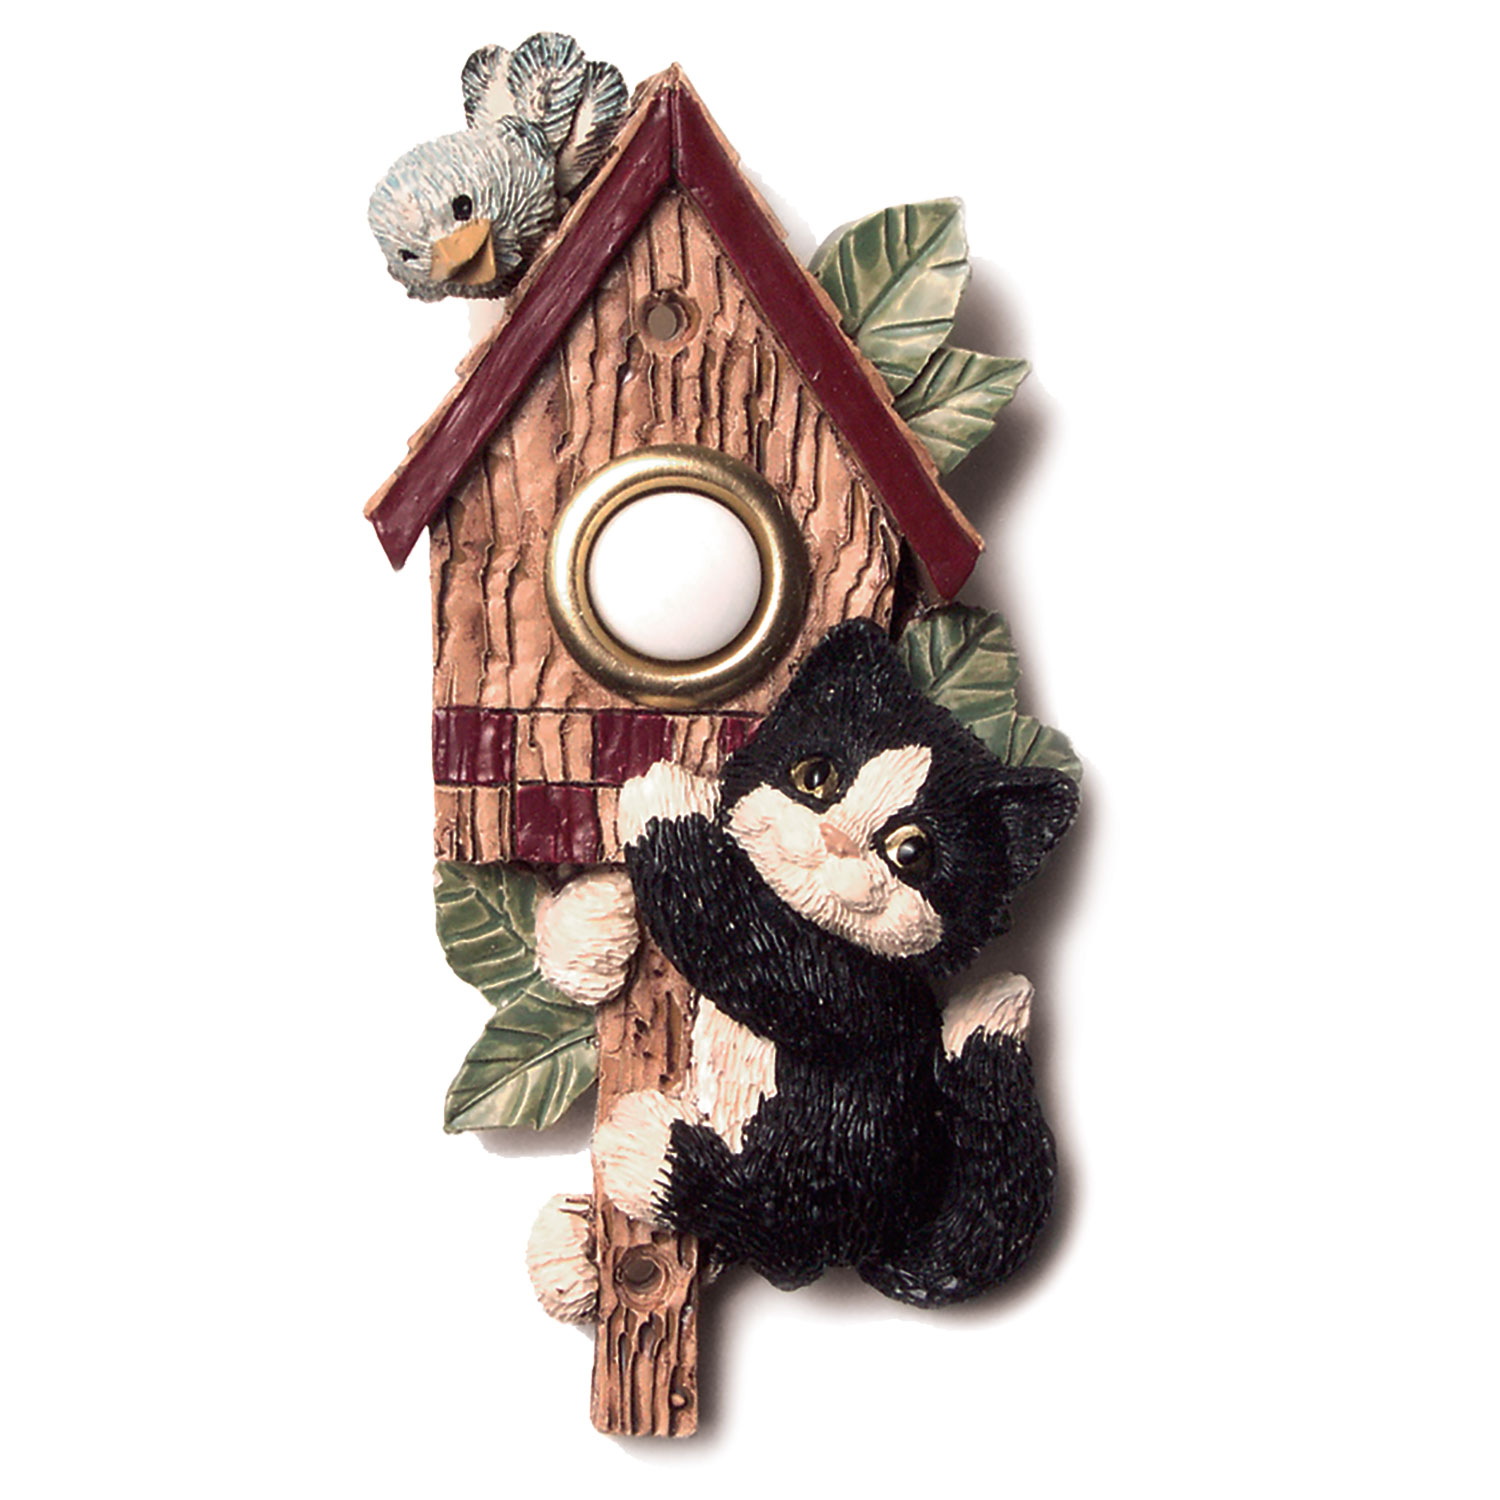 131007 - Vicki Lane Black and White Cat Raiding Birdhouse Lighted Button Doorbell